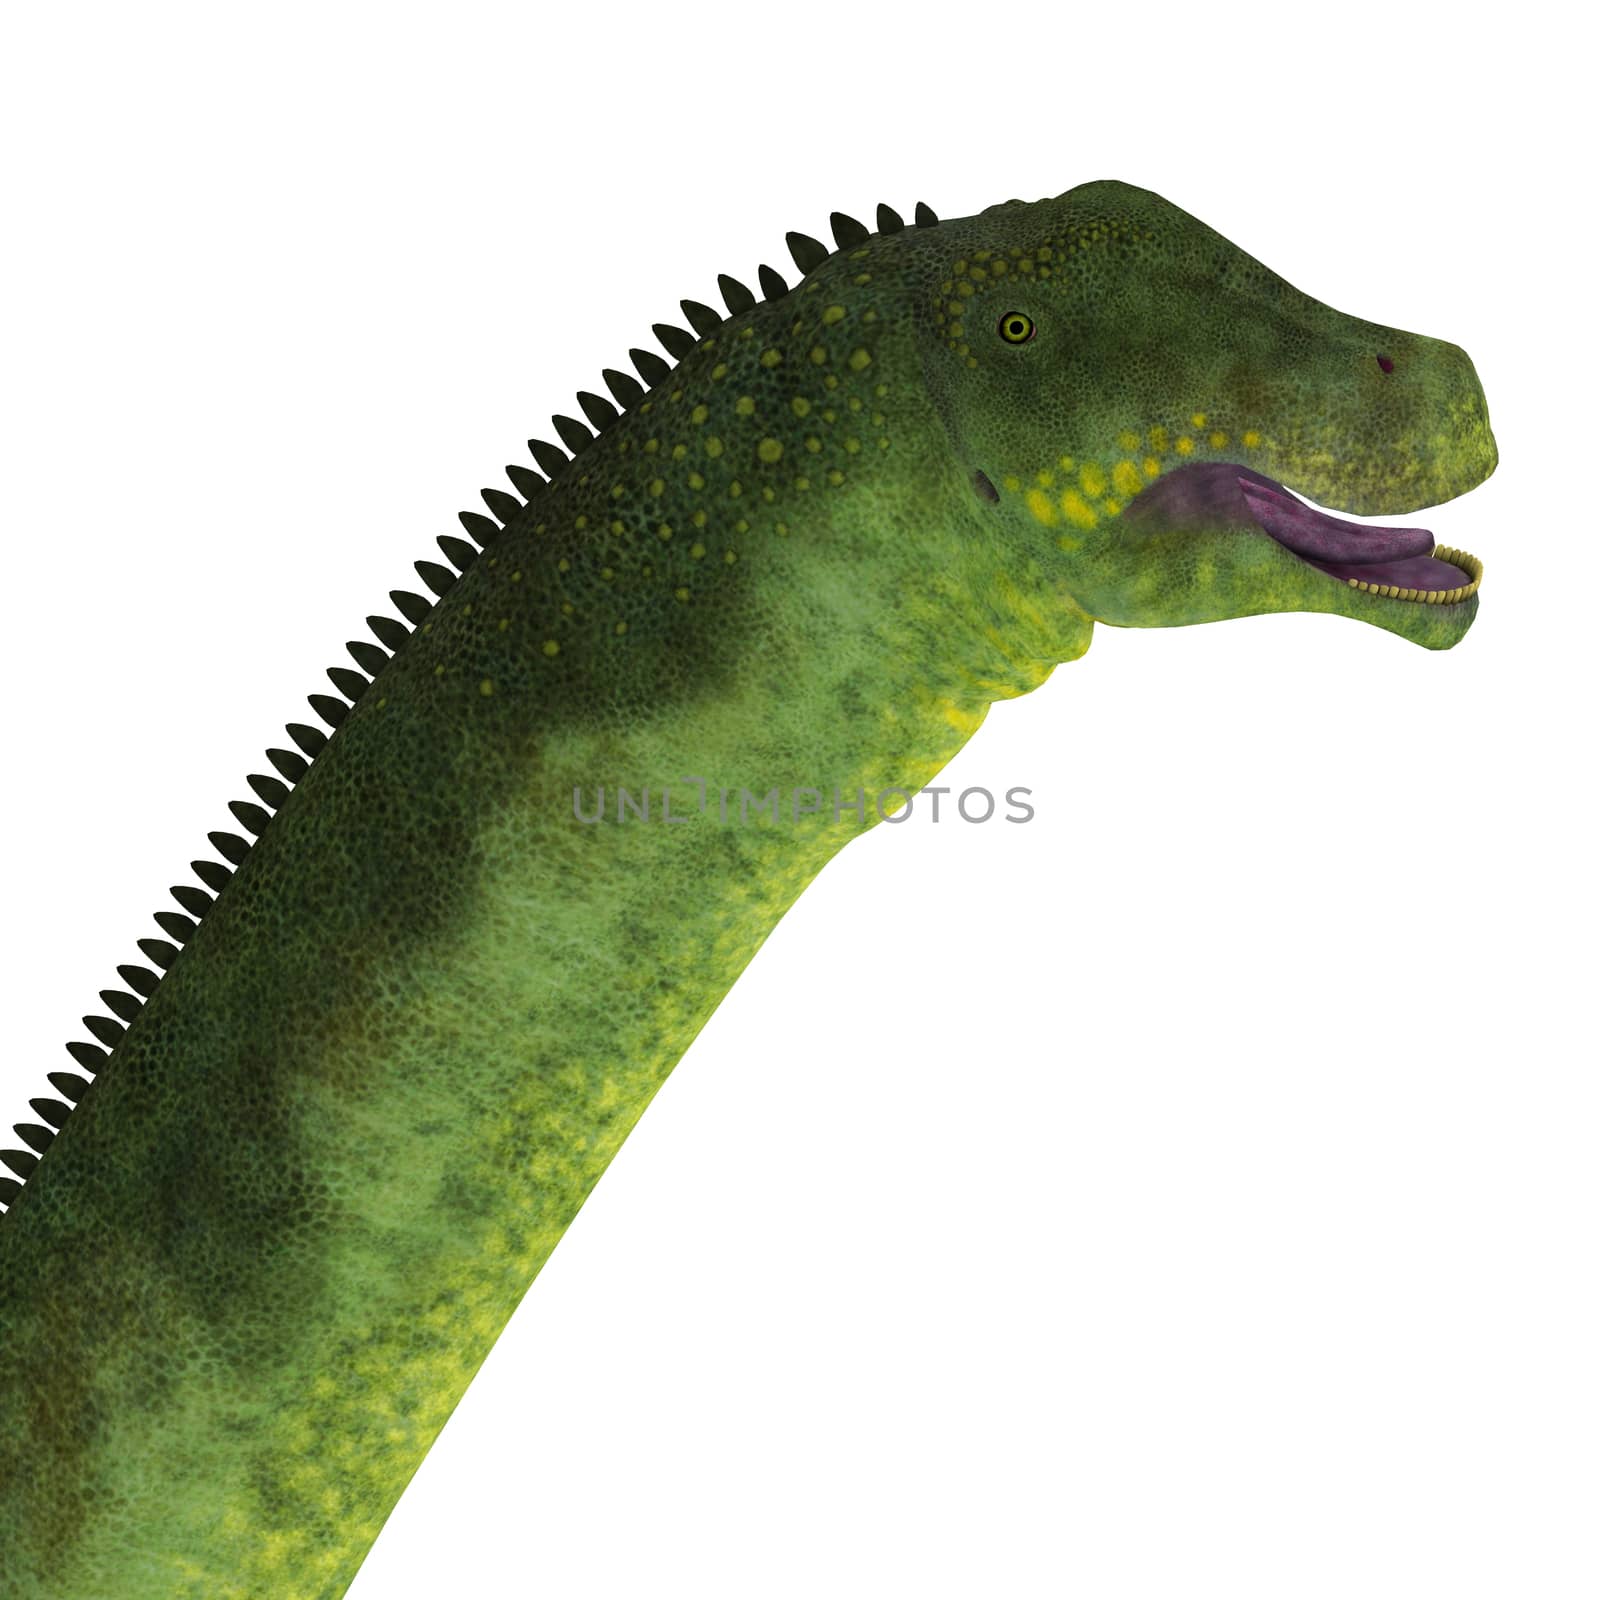 Puertasaurus Dinosaur Head by Catmando